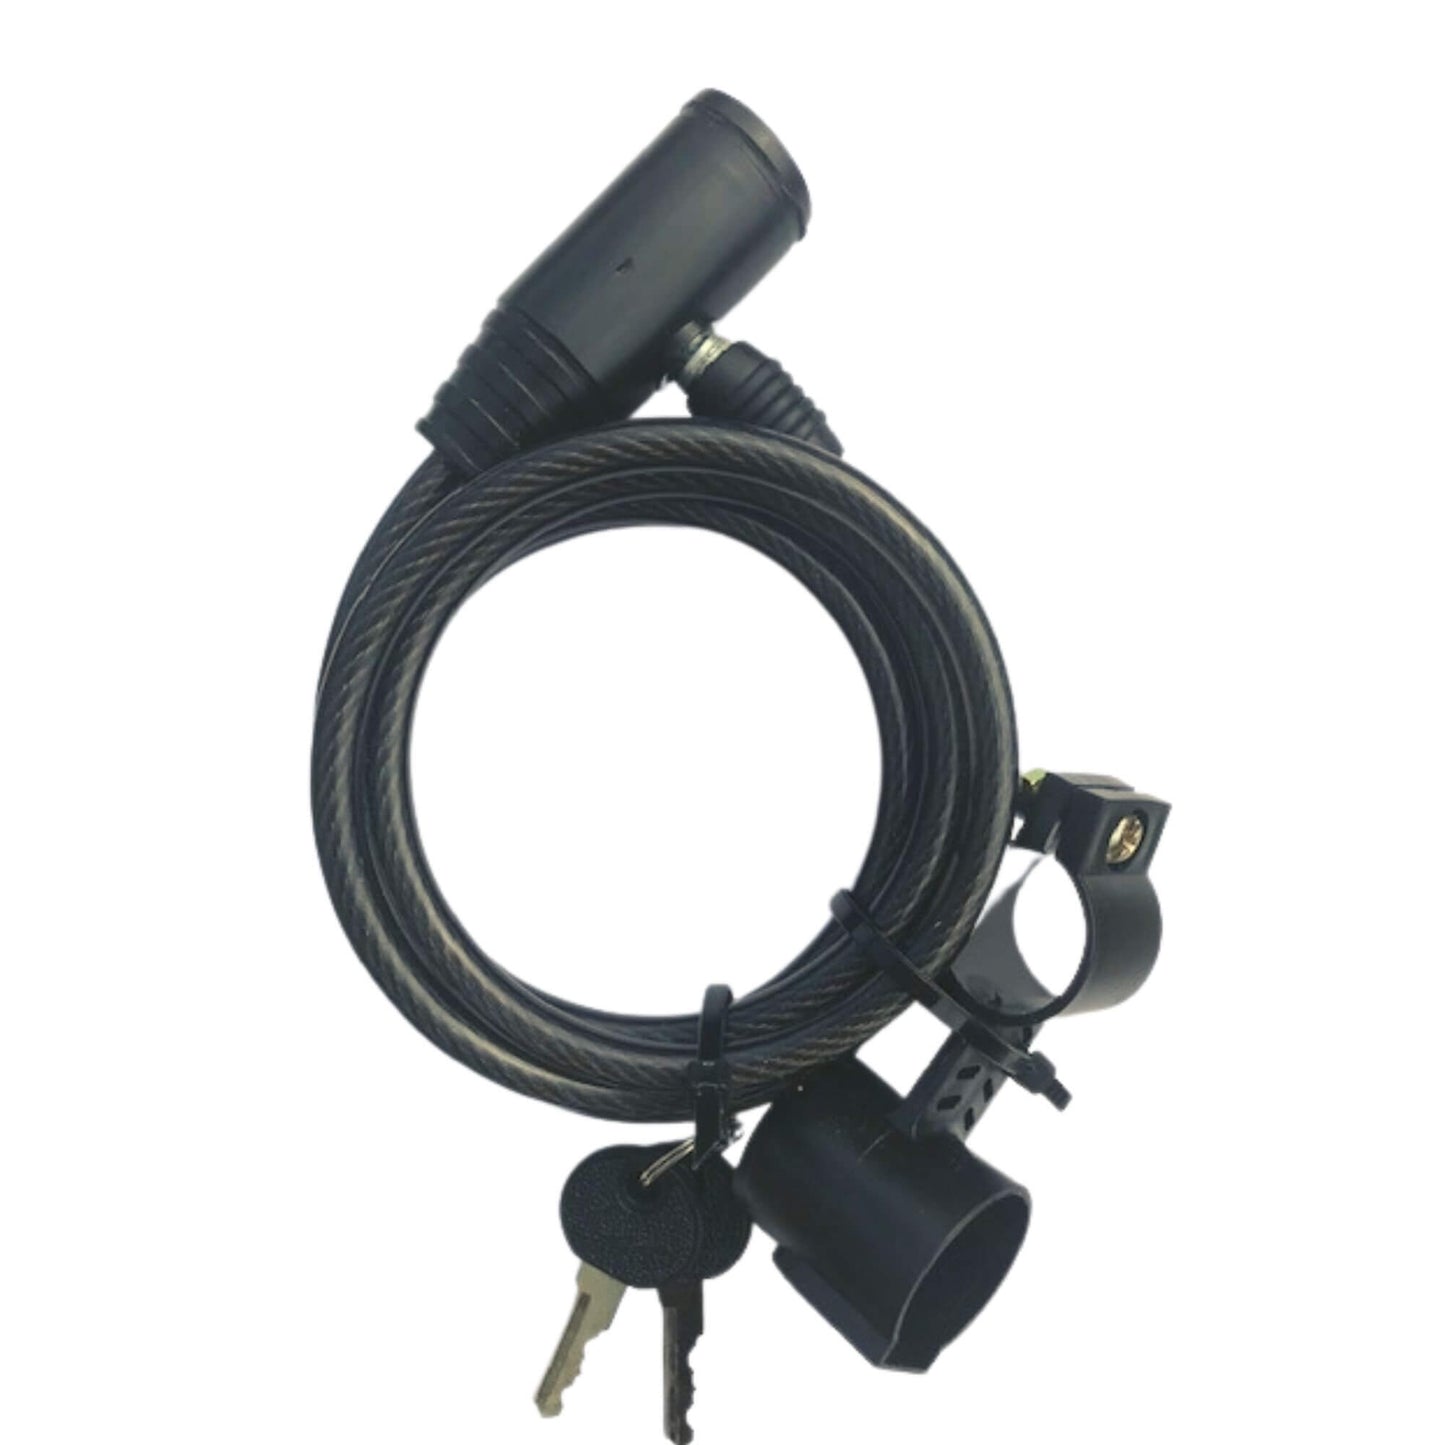 Bike lock with key - black color